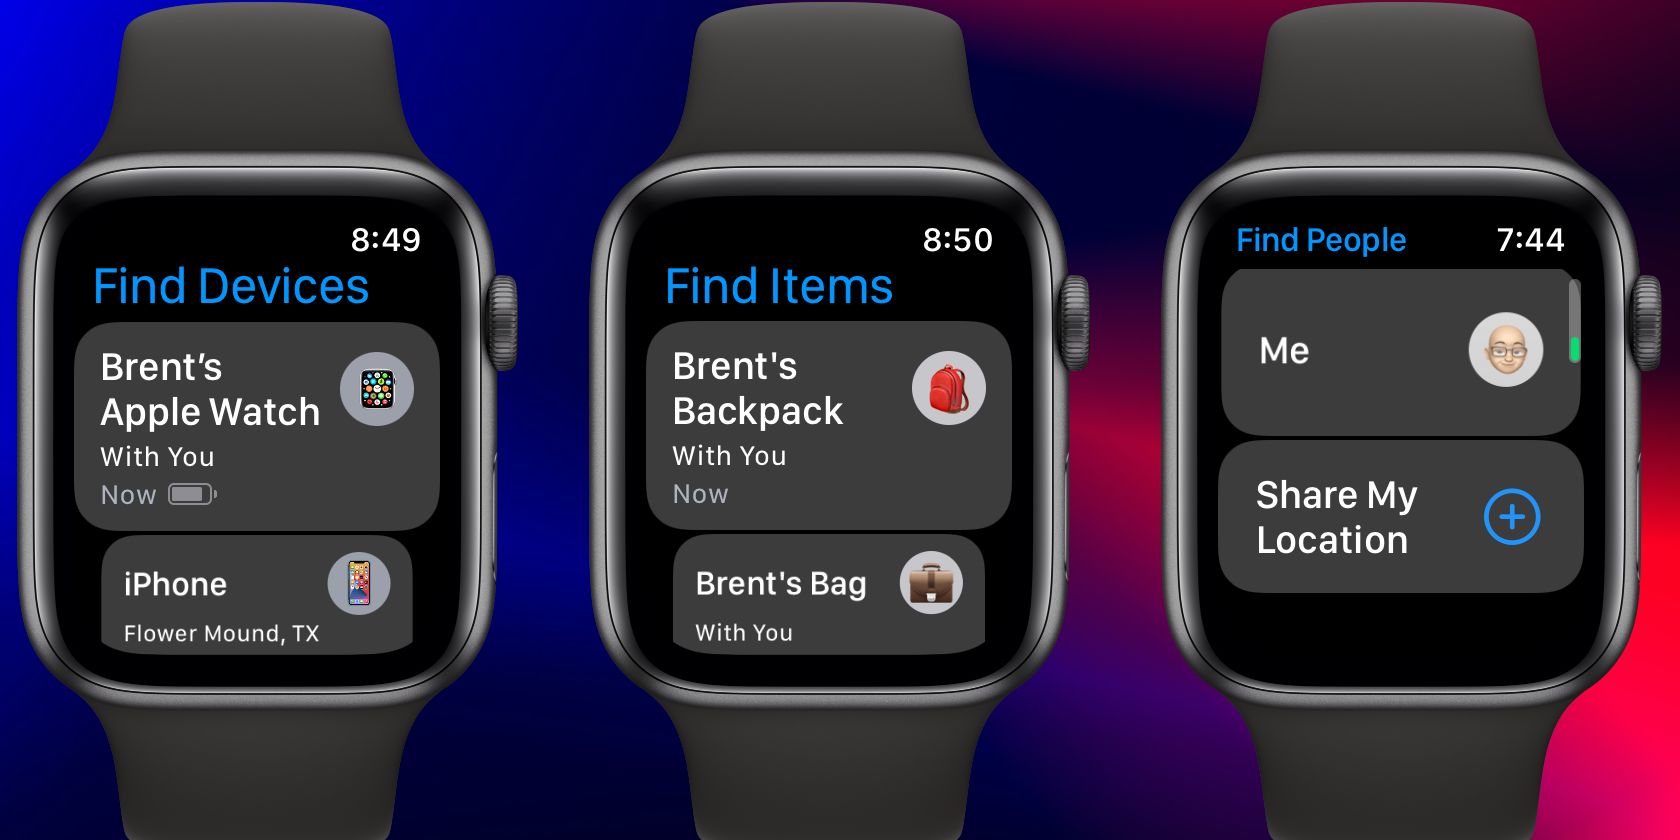 Apple Watch Find Apps